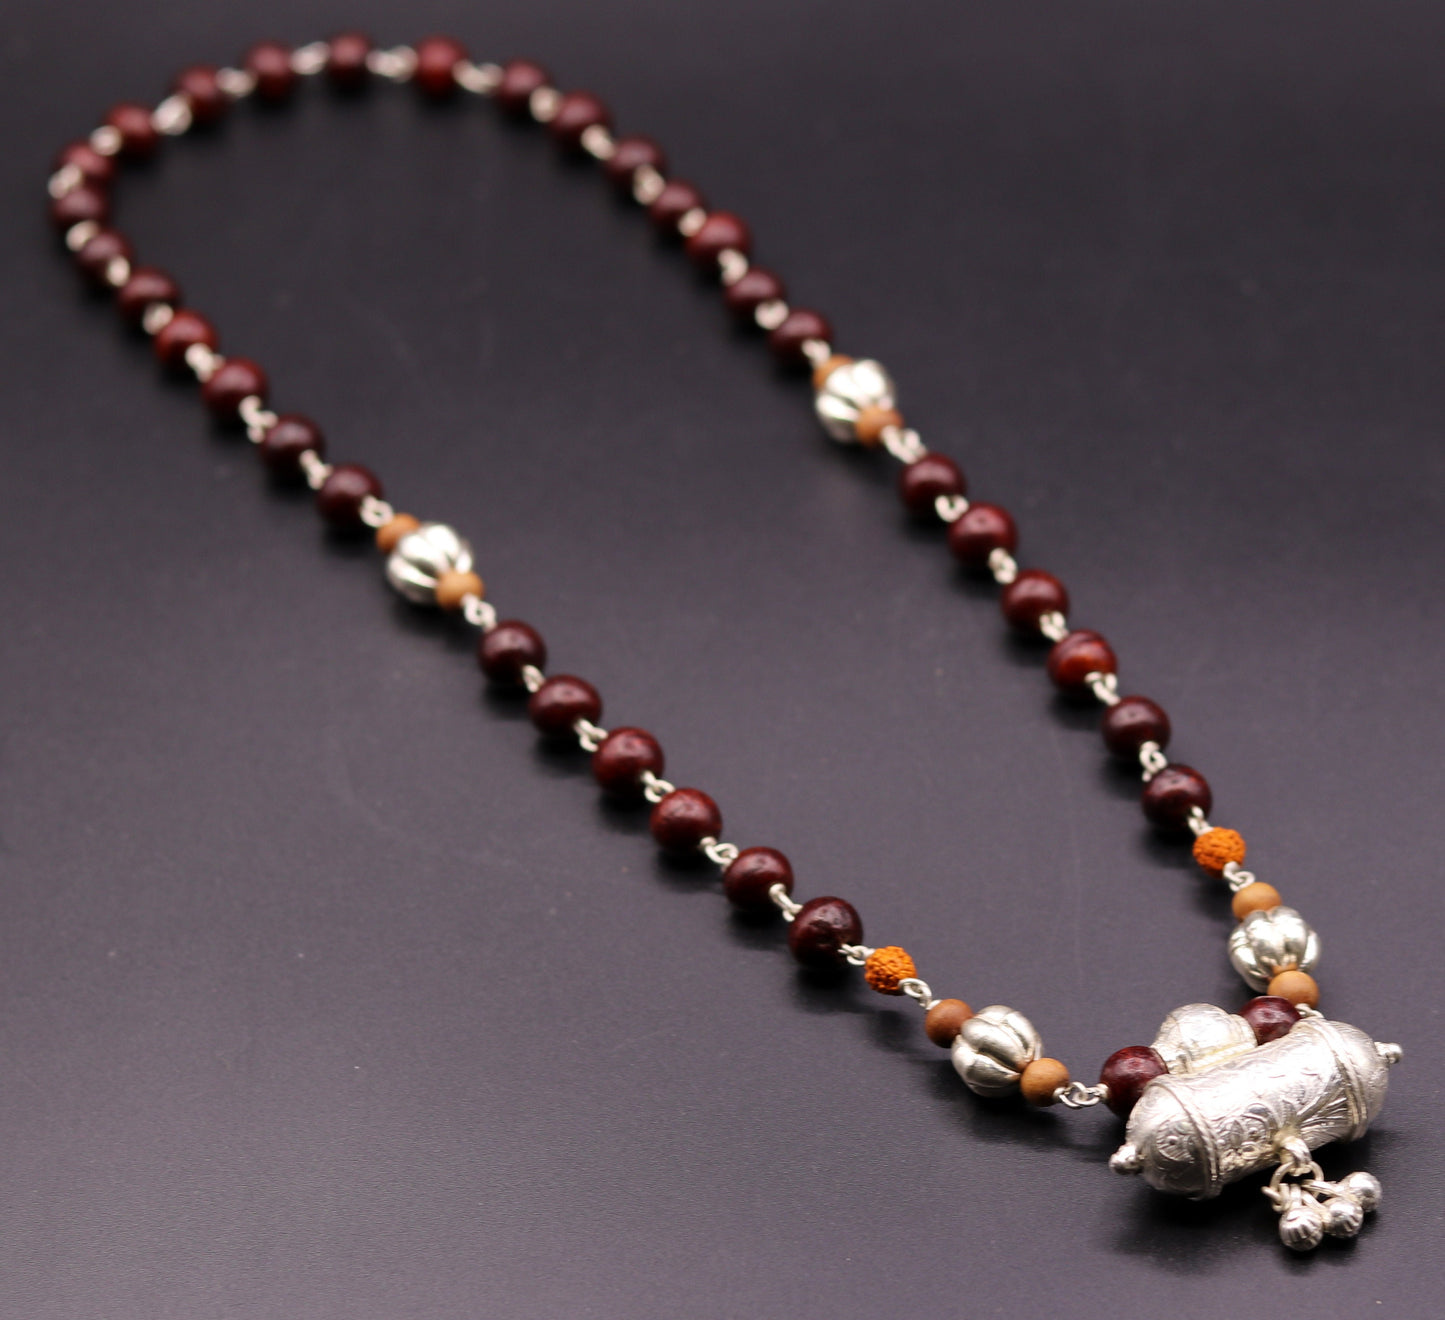 Vintage design hamdade solid silver handamde sandalwood and rudraksha beads tribal amulet pendant with hanging bells  necklace jewelry set36 - TRIBAL ORNAMENTS